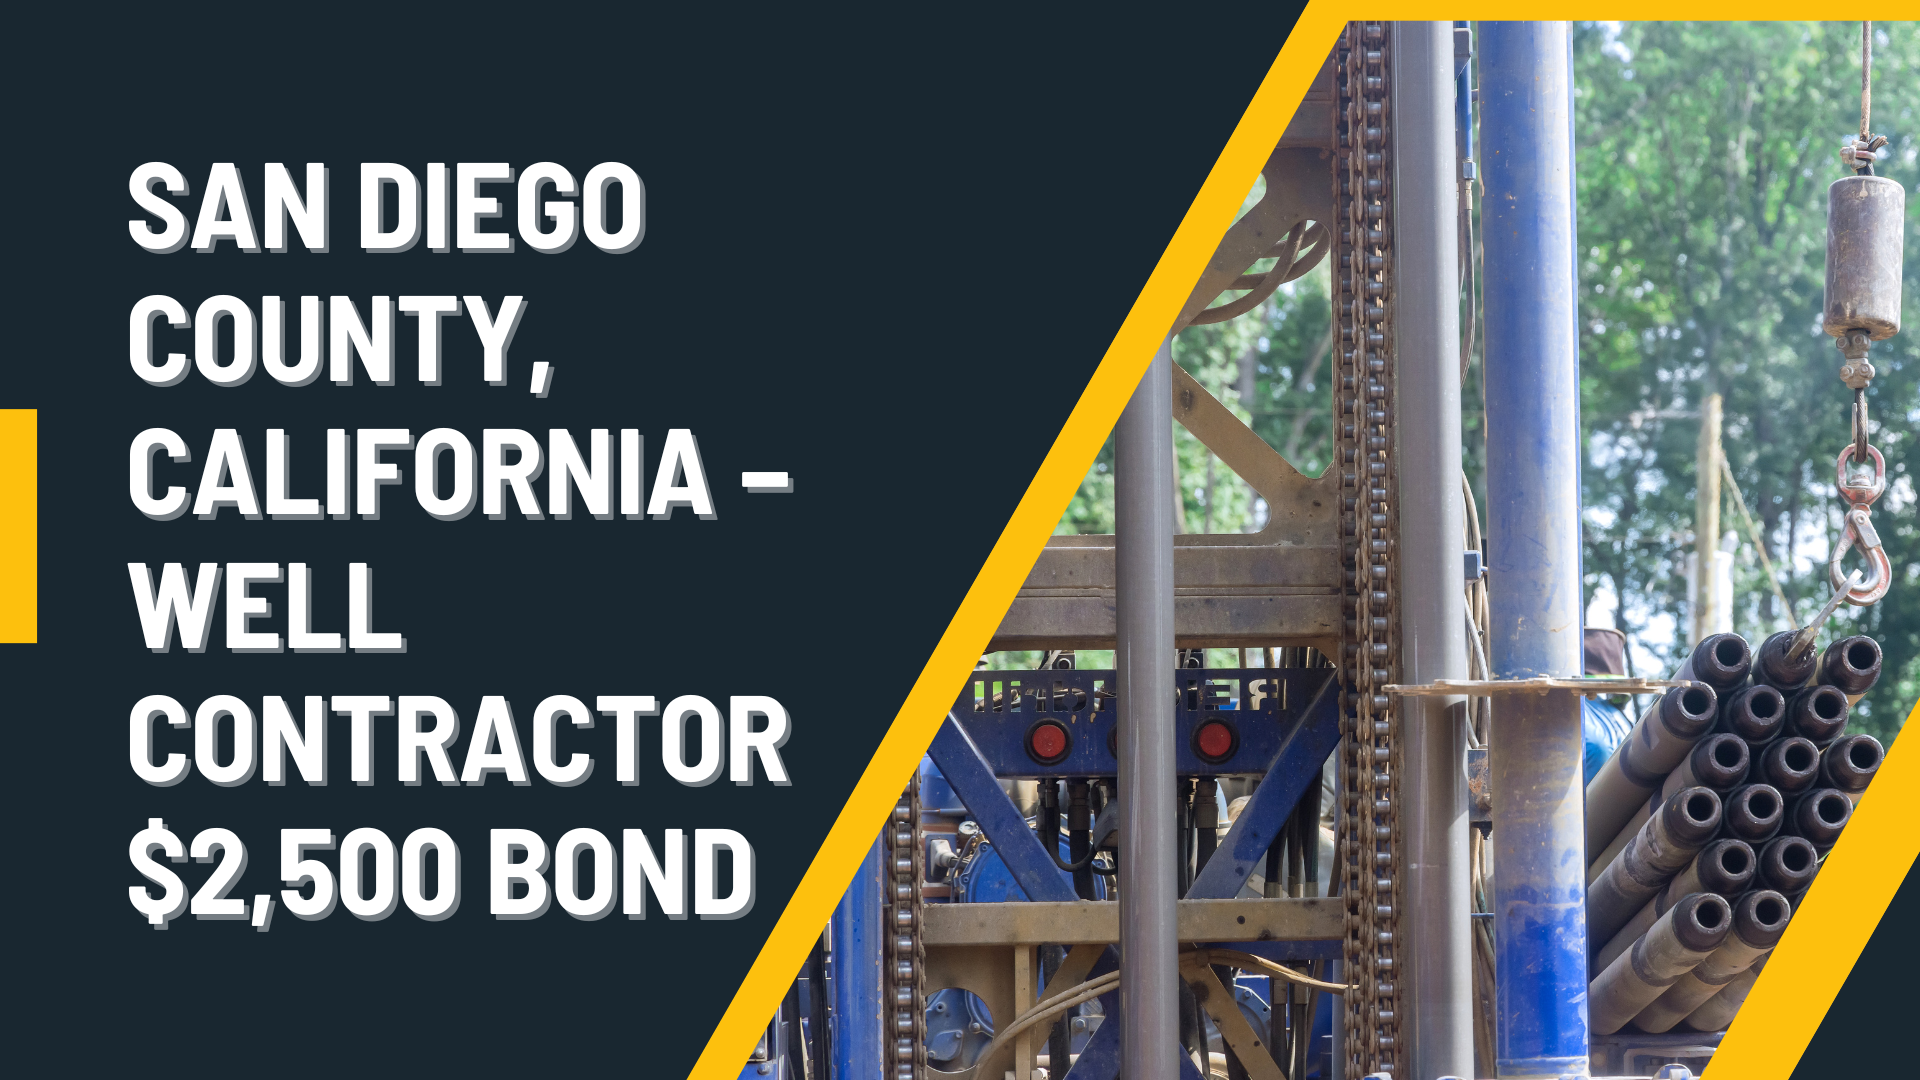 Surety Bond-San Diego County, California – Well Contractor $2,500 Bond